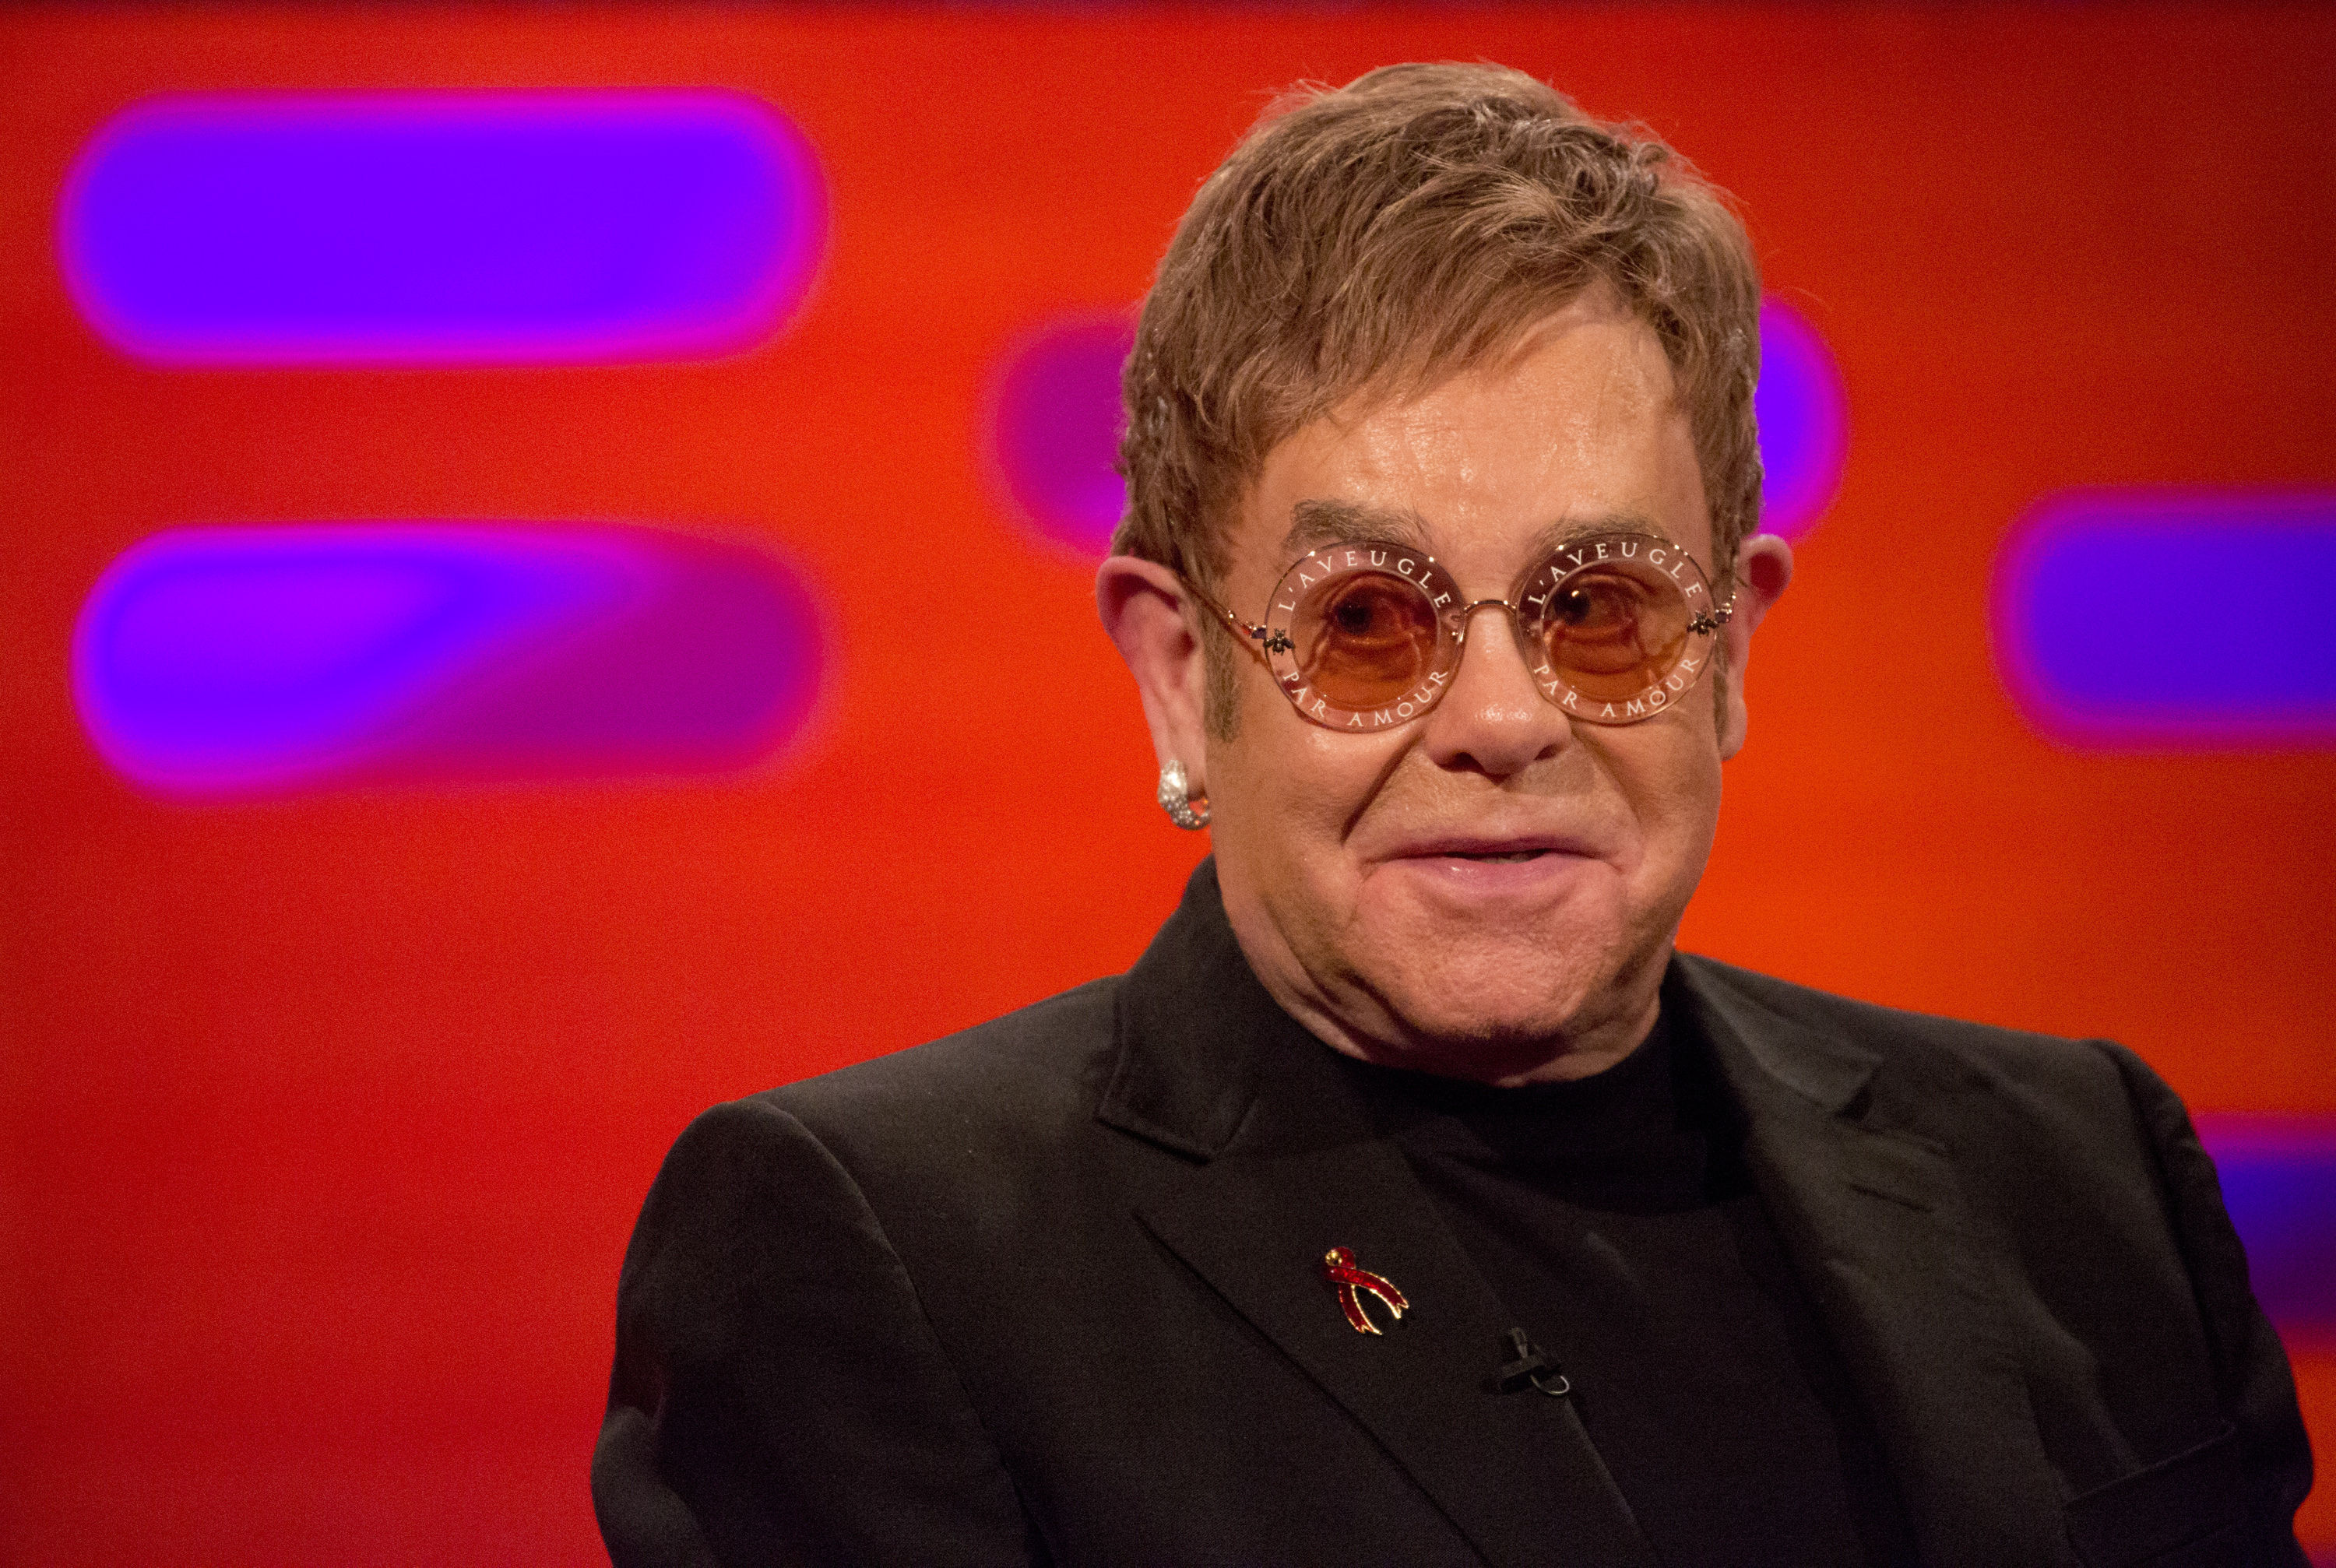 Elton John during filming of the Graham Norton Show